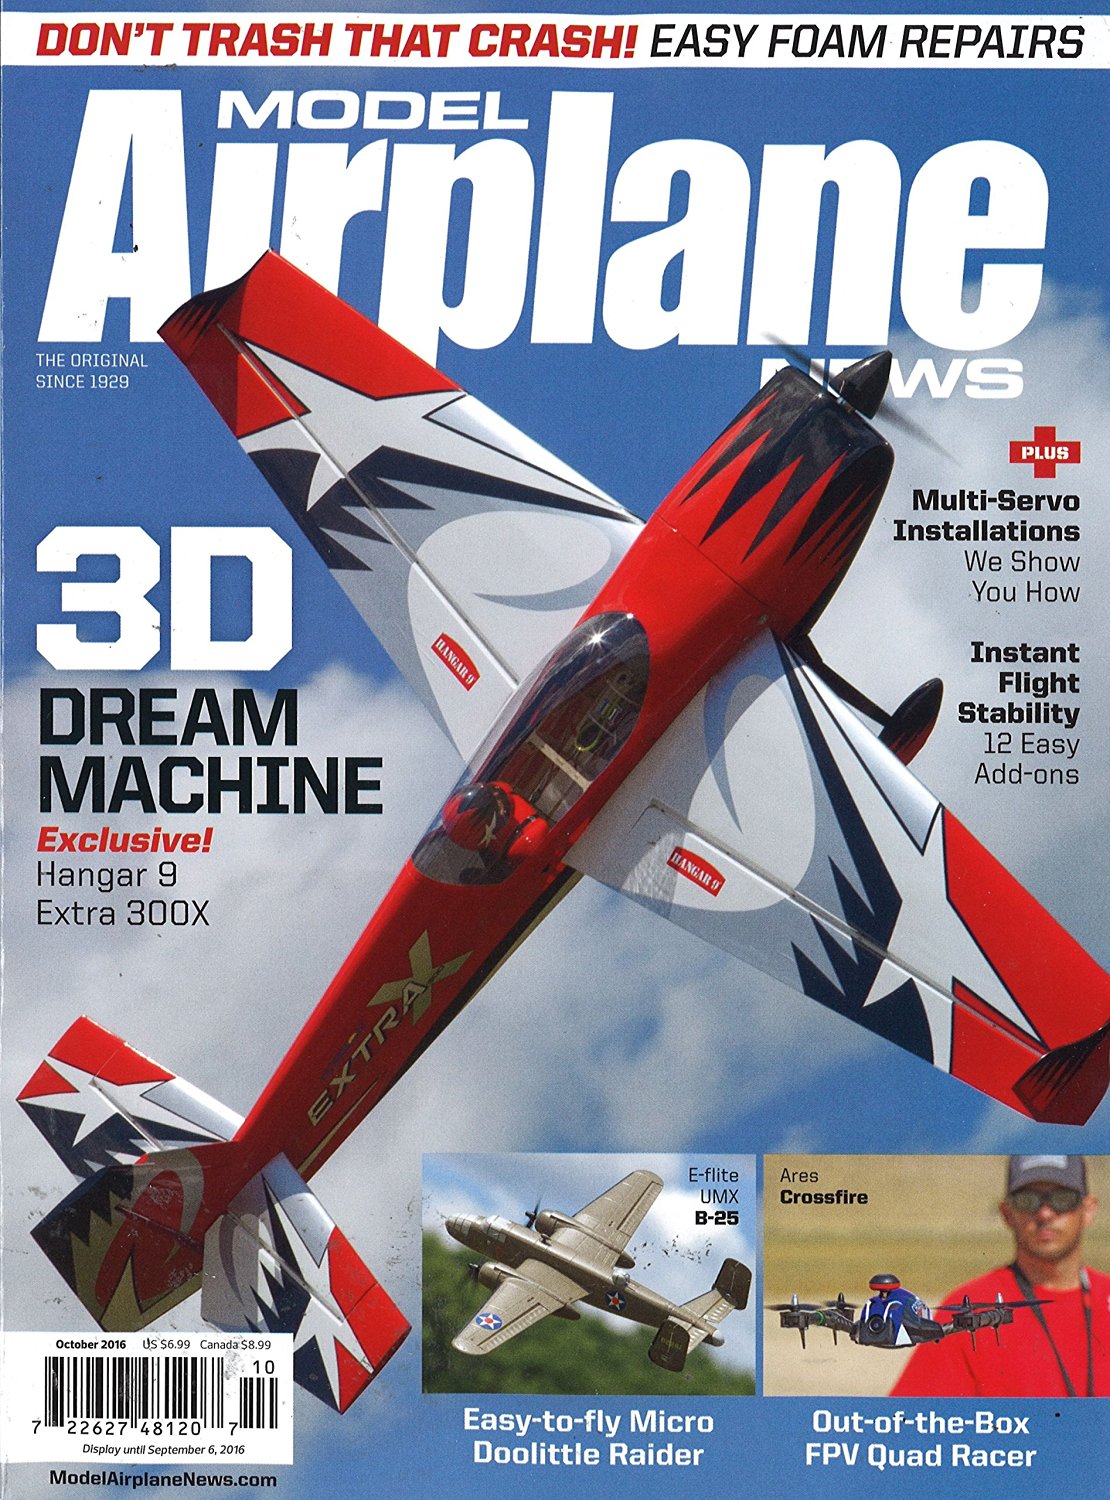 Forum magazines. Magazines about Airplane. Age of Air. Artforum Journal.